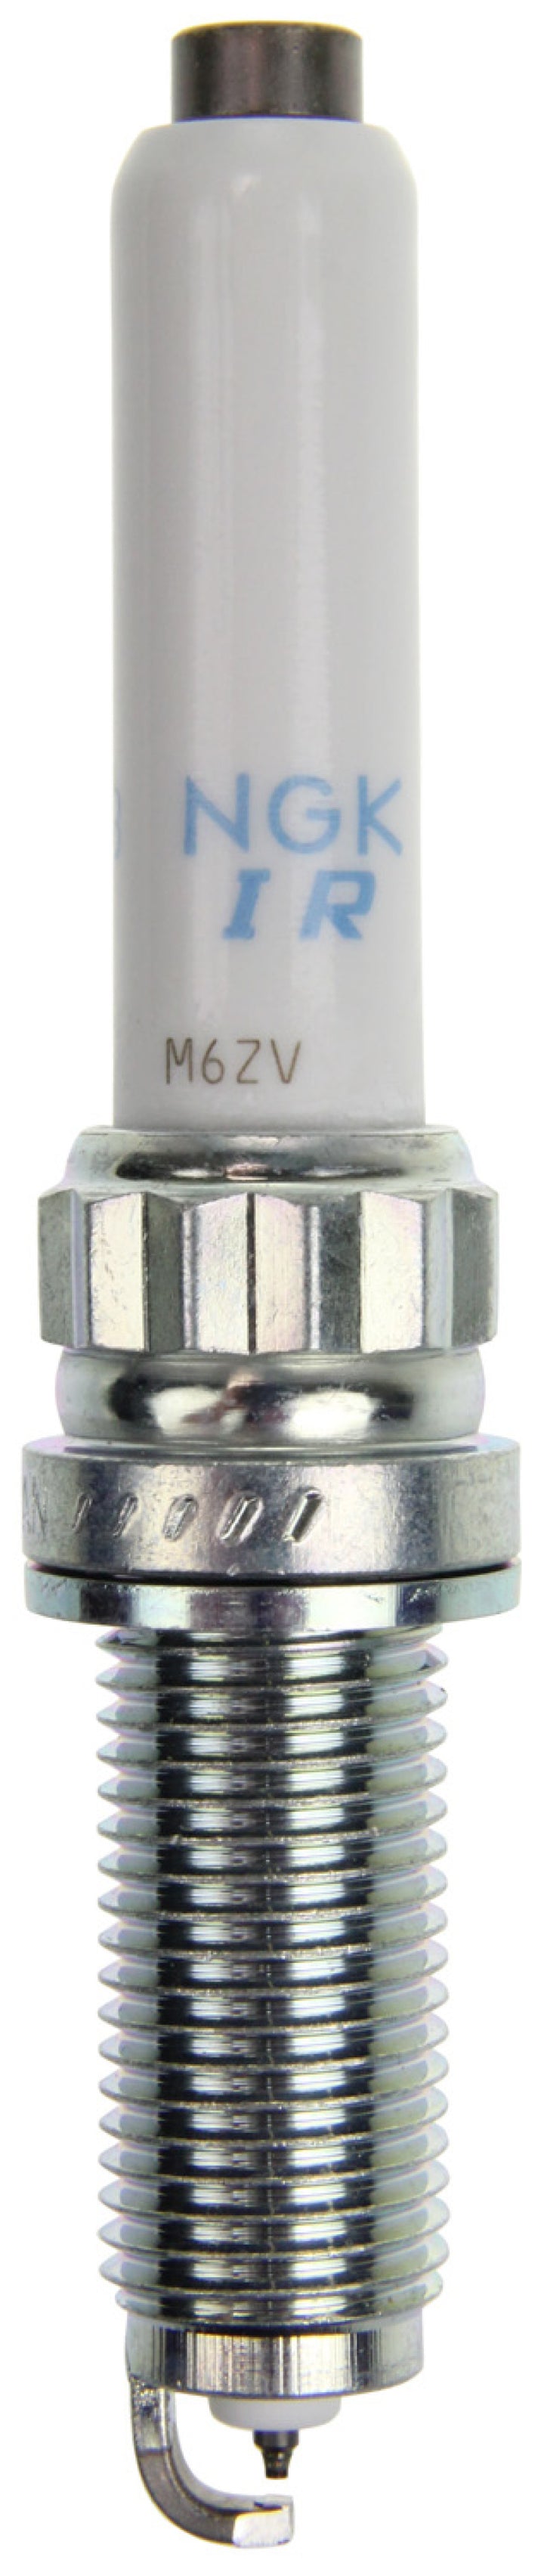 NGK Laser Iridium Spark Plug Box of 4 (SILZKGR8B8S).